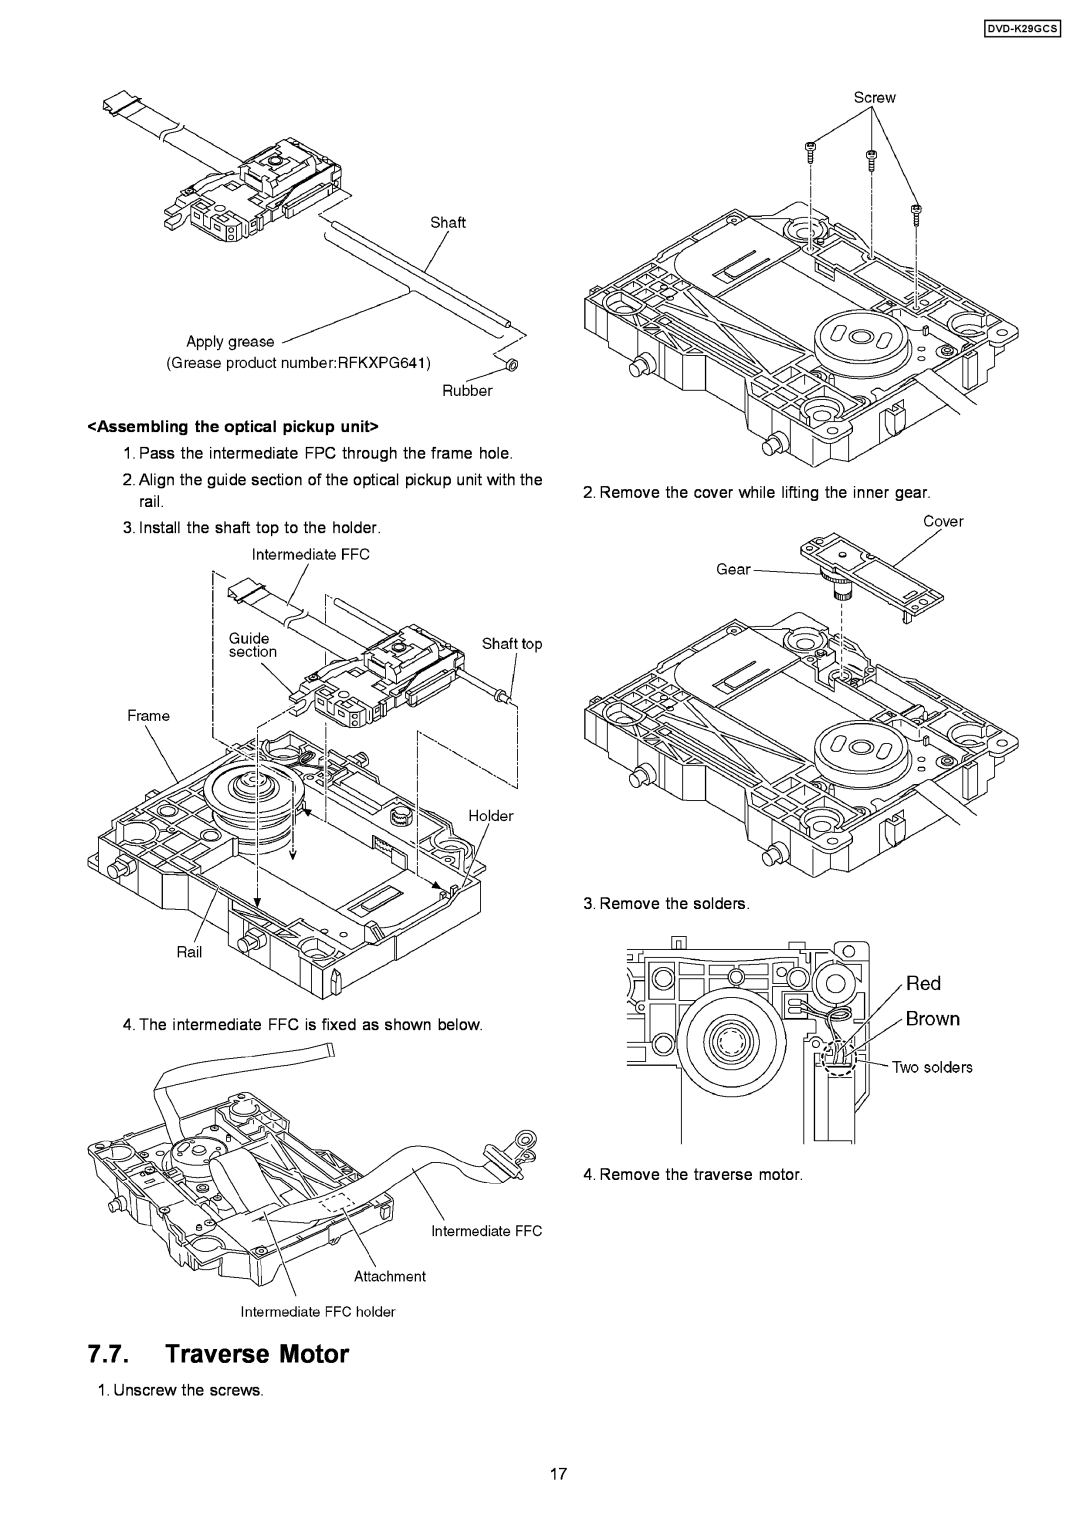 Panasonic DVD-K29GCS specifications Traverse Motor, <Assembling the optical pickup unit> 